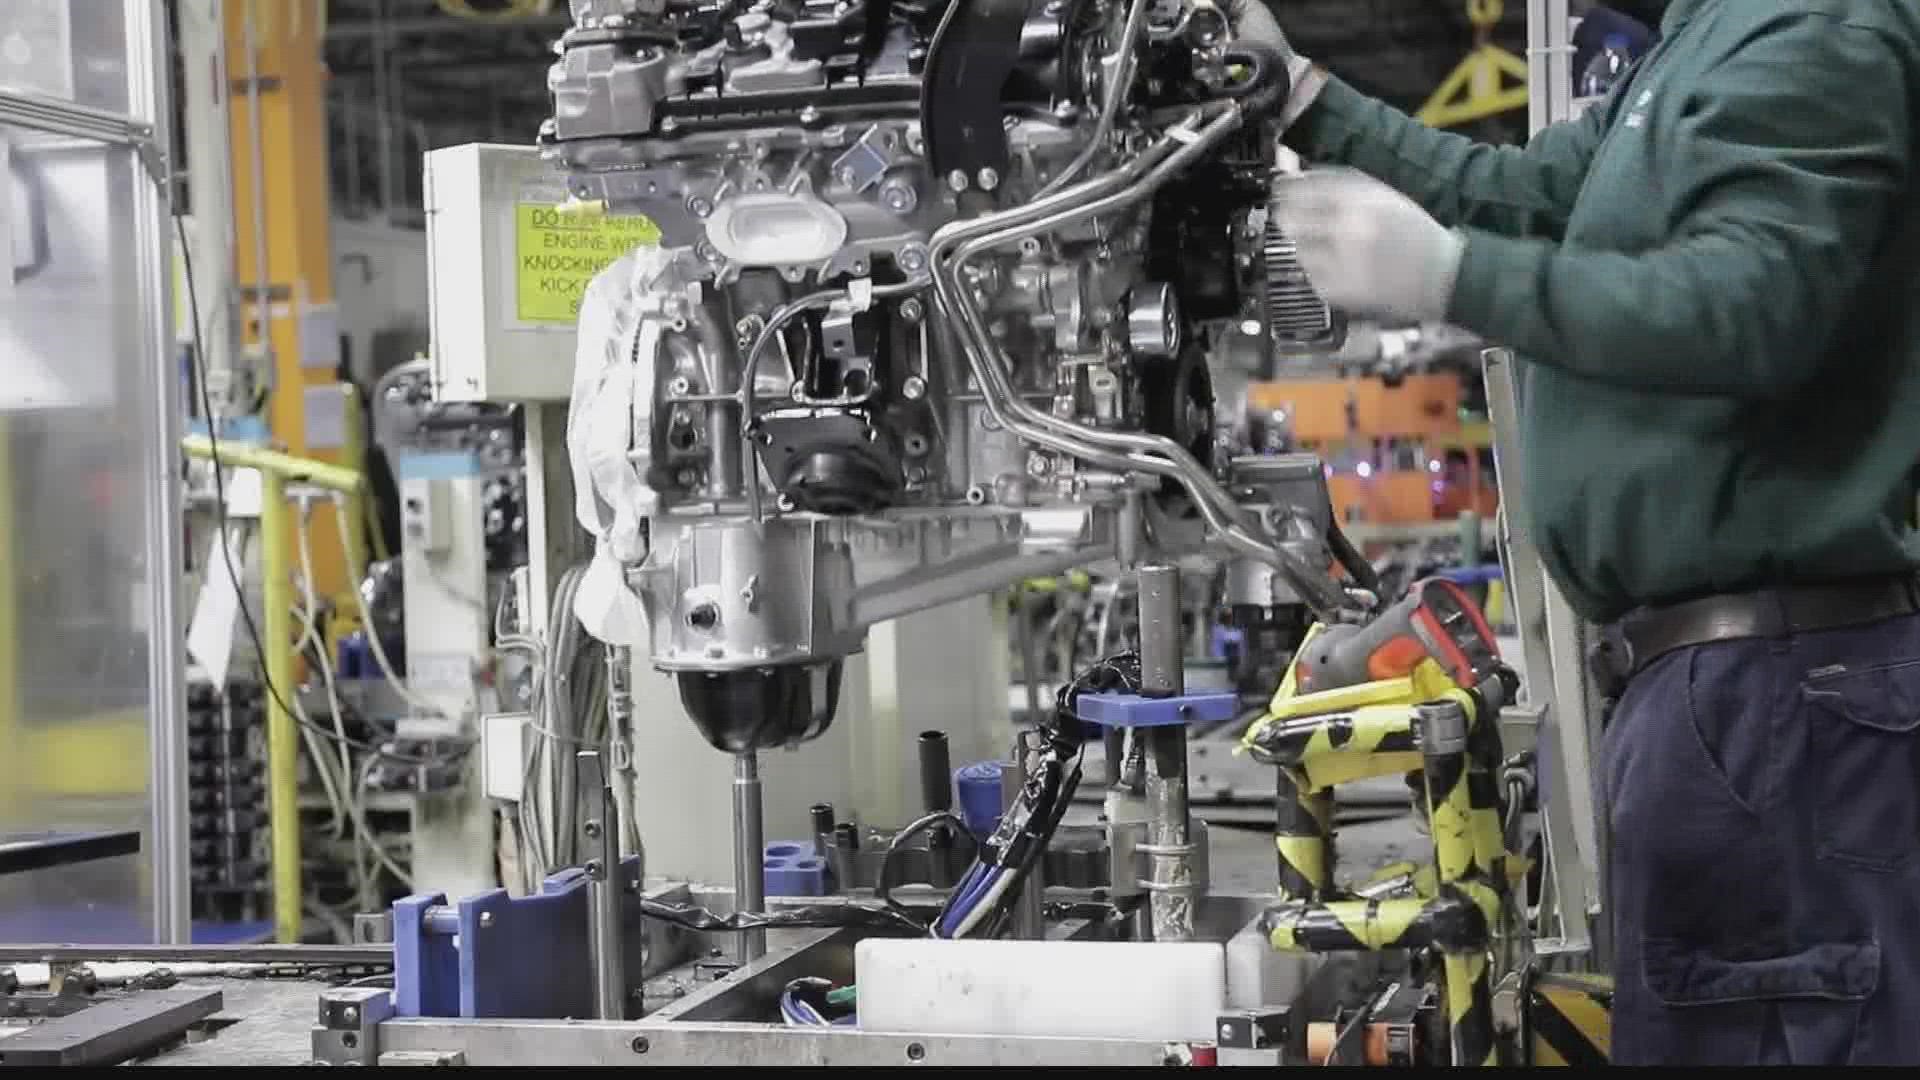 Twinturbo V6 engine Toyota Tundra soon to be revealed